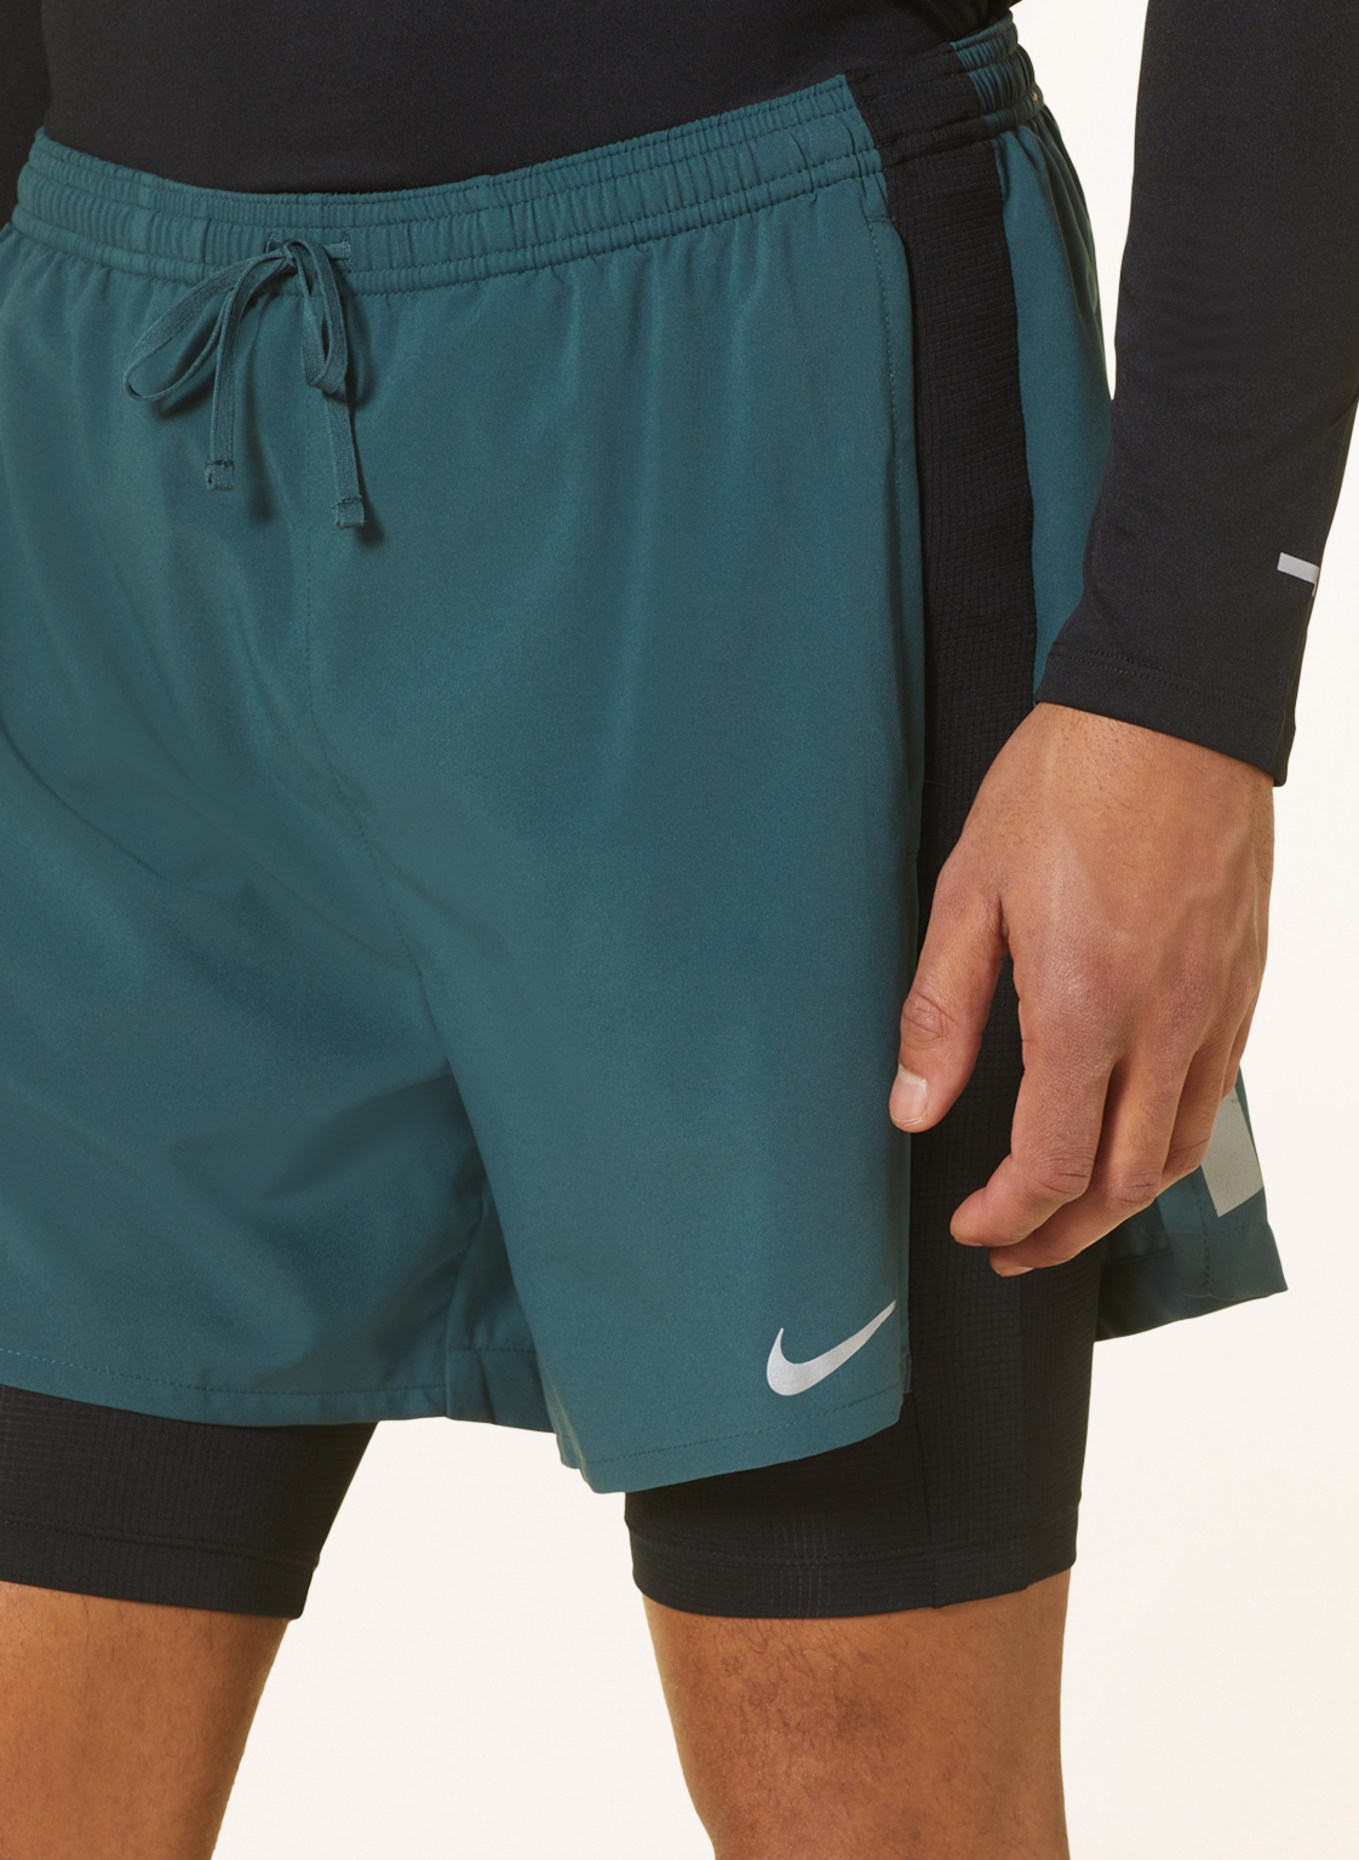 Nike 2-in-1 running shorts DRI-FIT RUN DIVISION STRIDE in dark green/ black